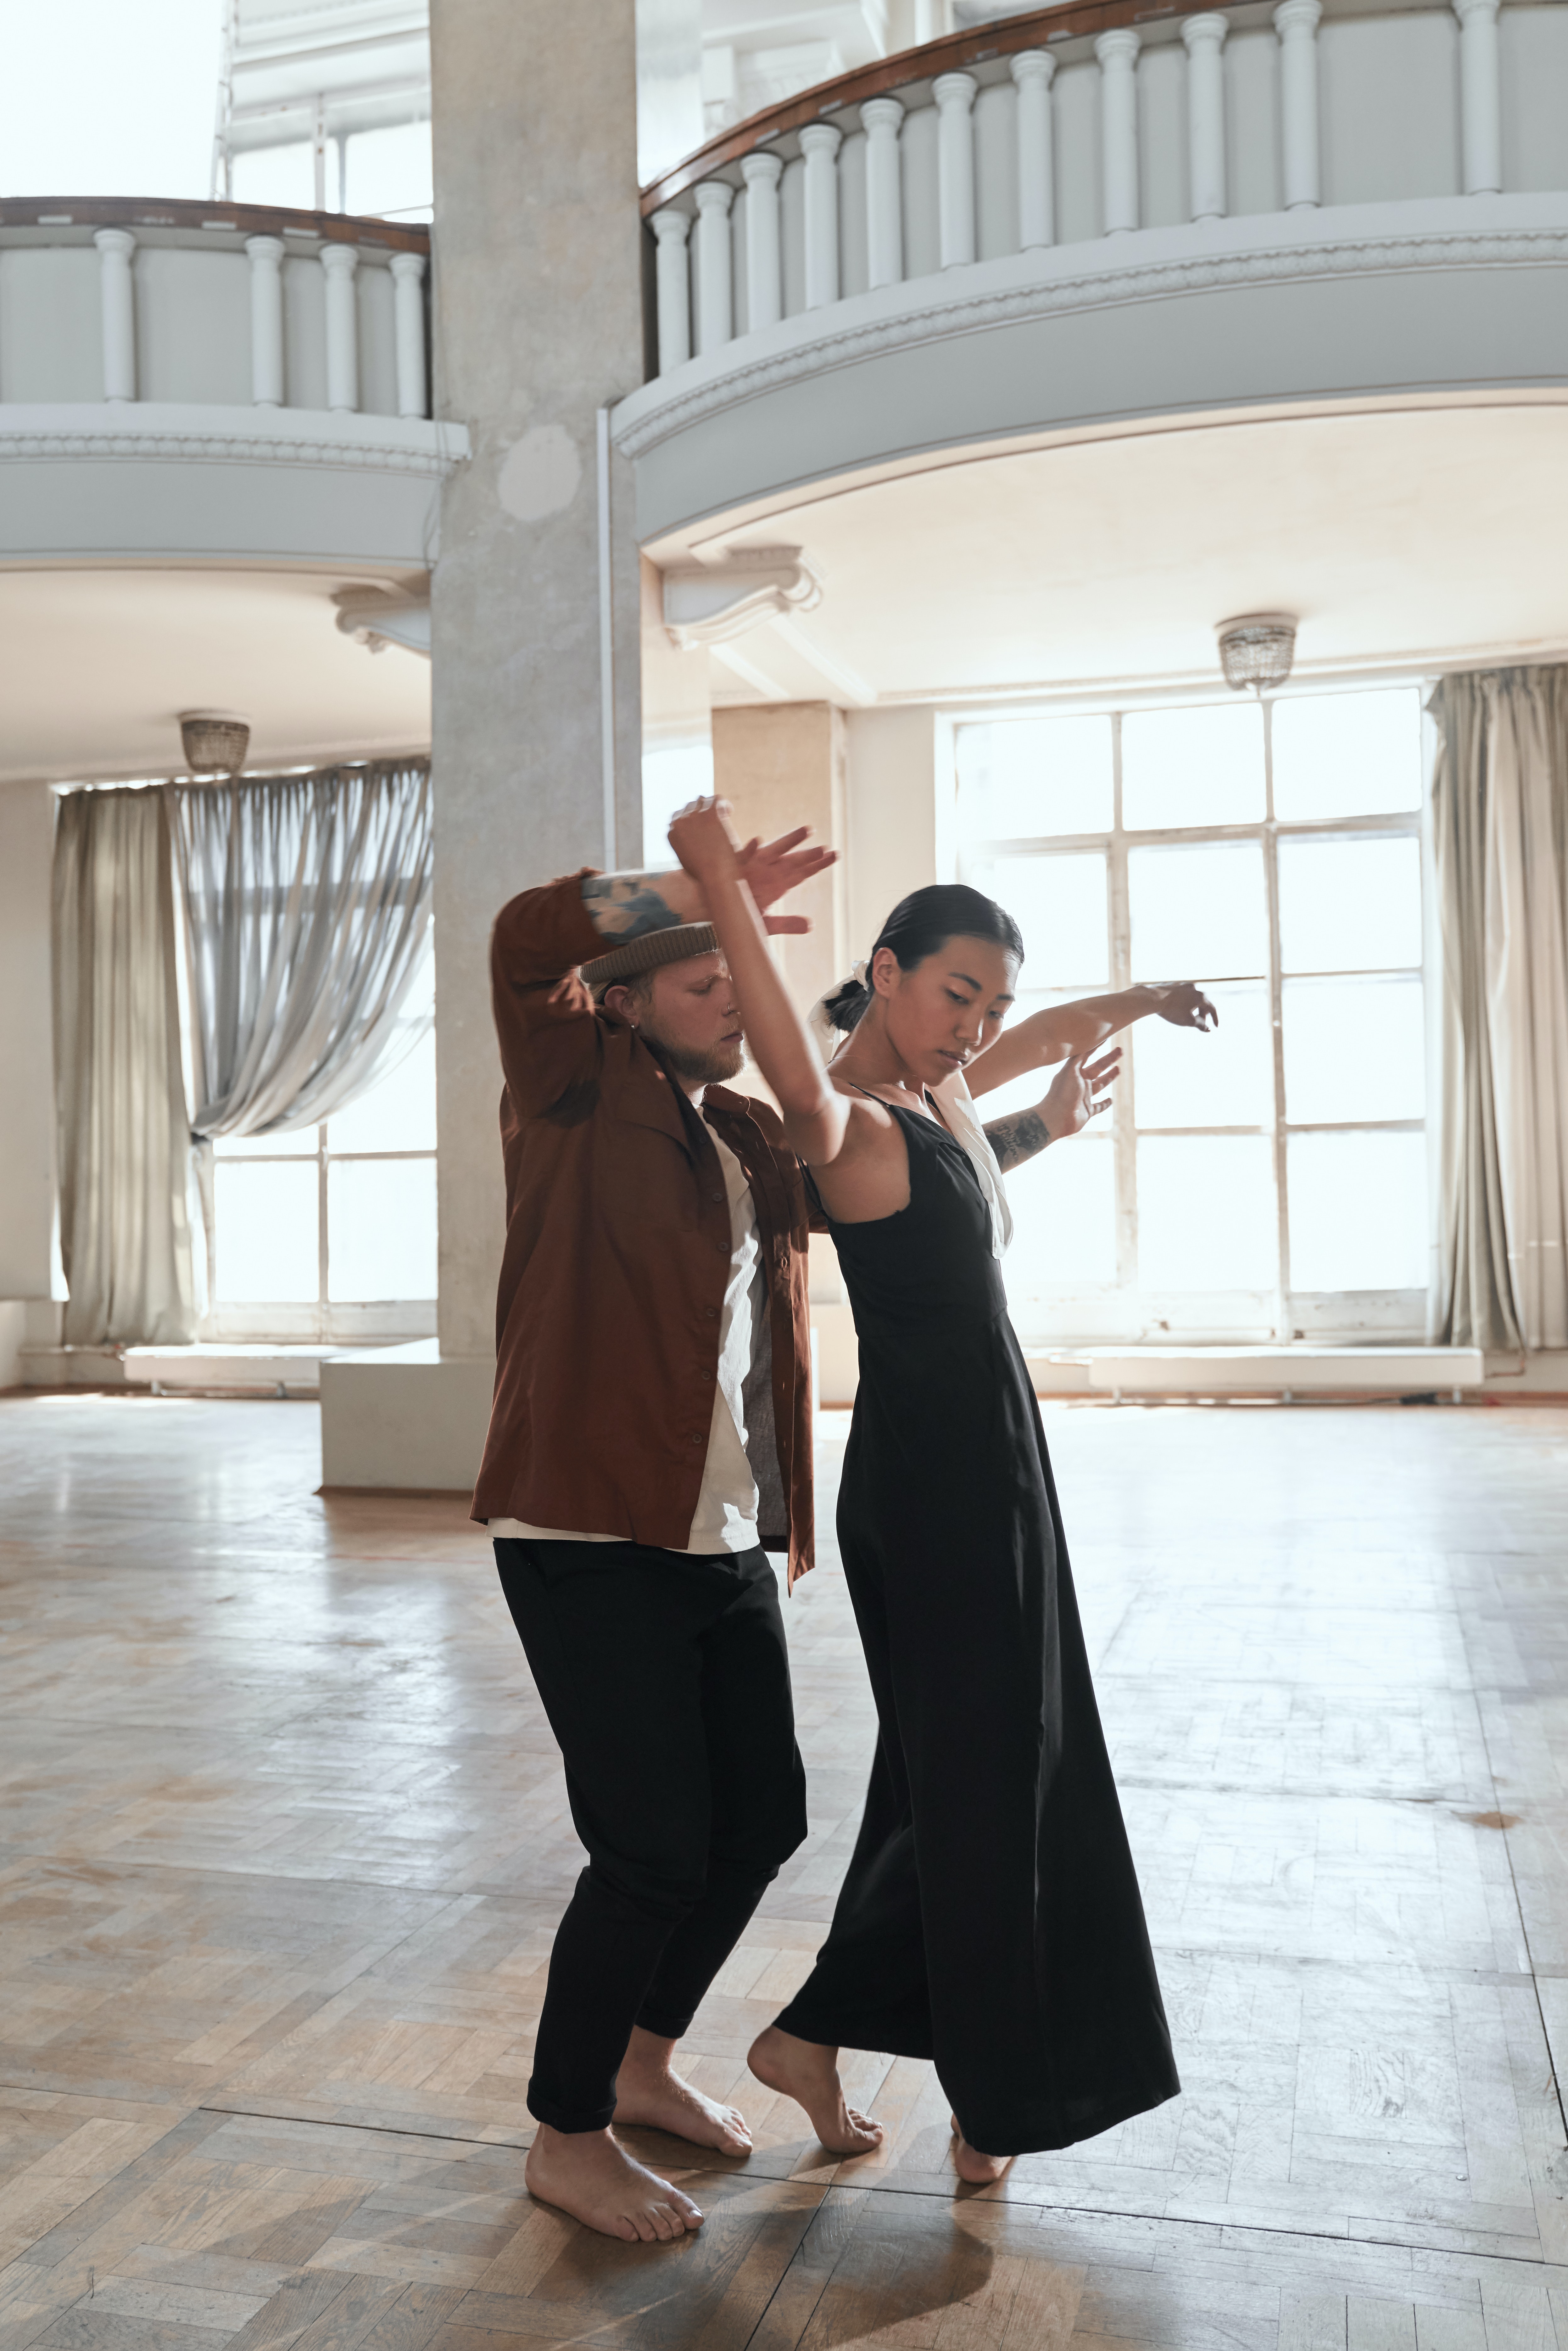 Two individuals dancing. | Source: Pexels